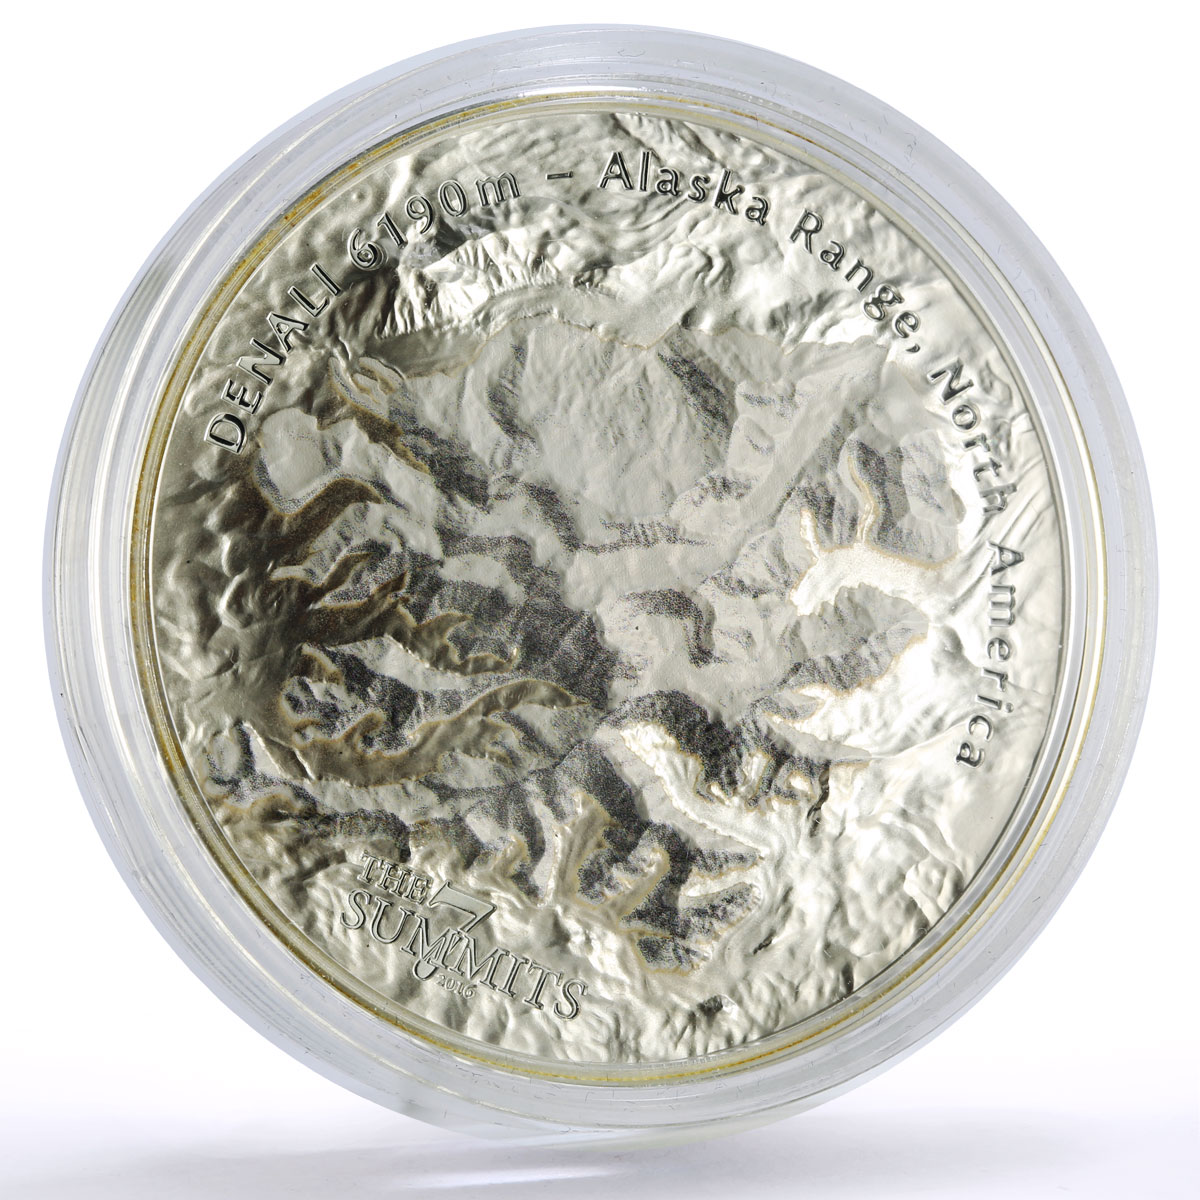 Cook Islands 25 dollars 7 Summits Alaska Denali Mountain silver coin 2016